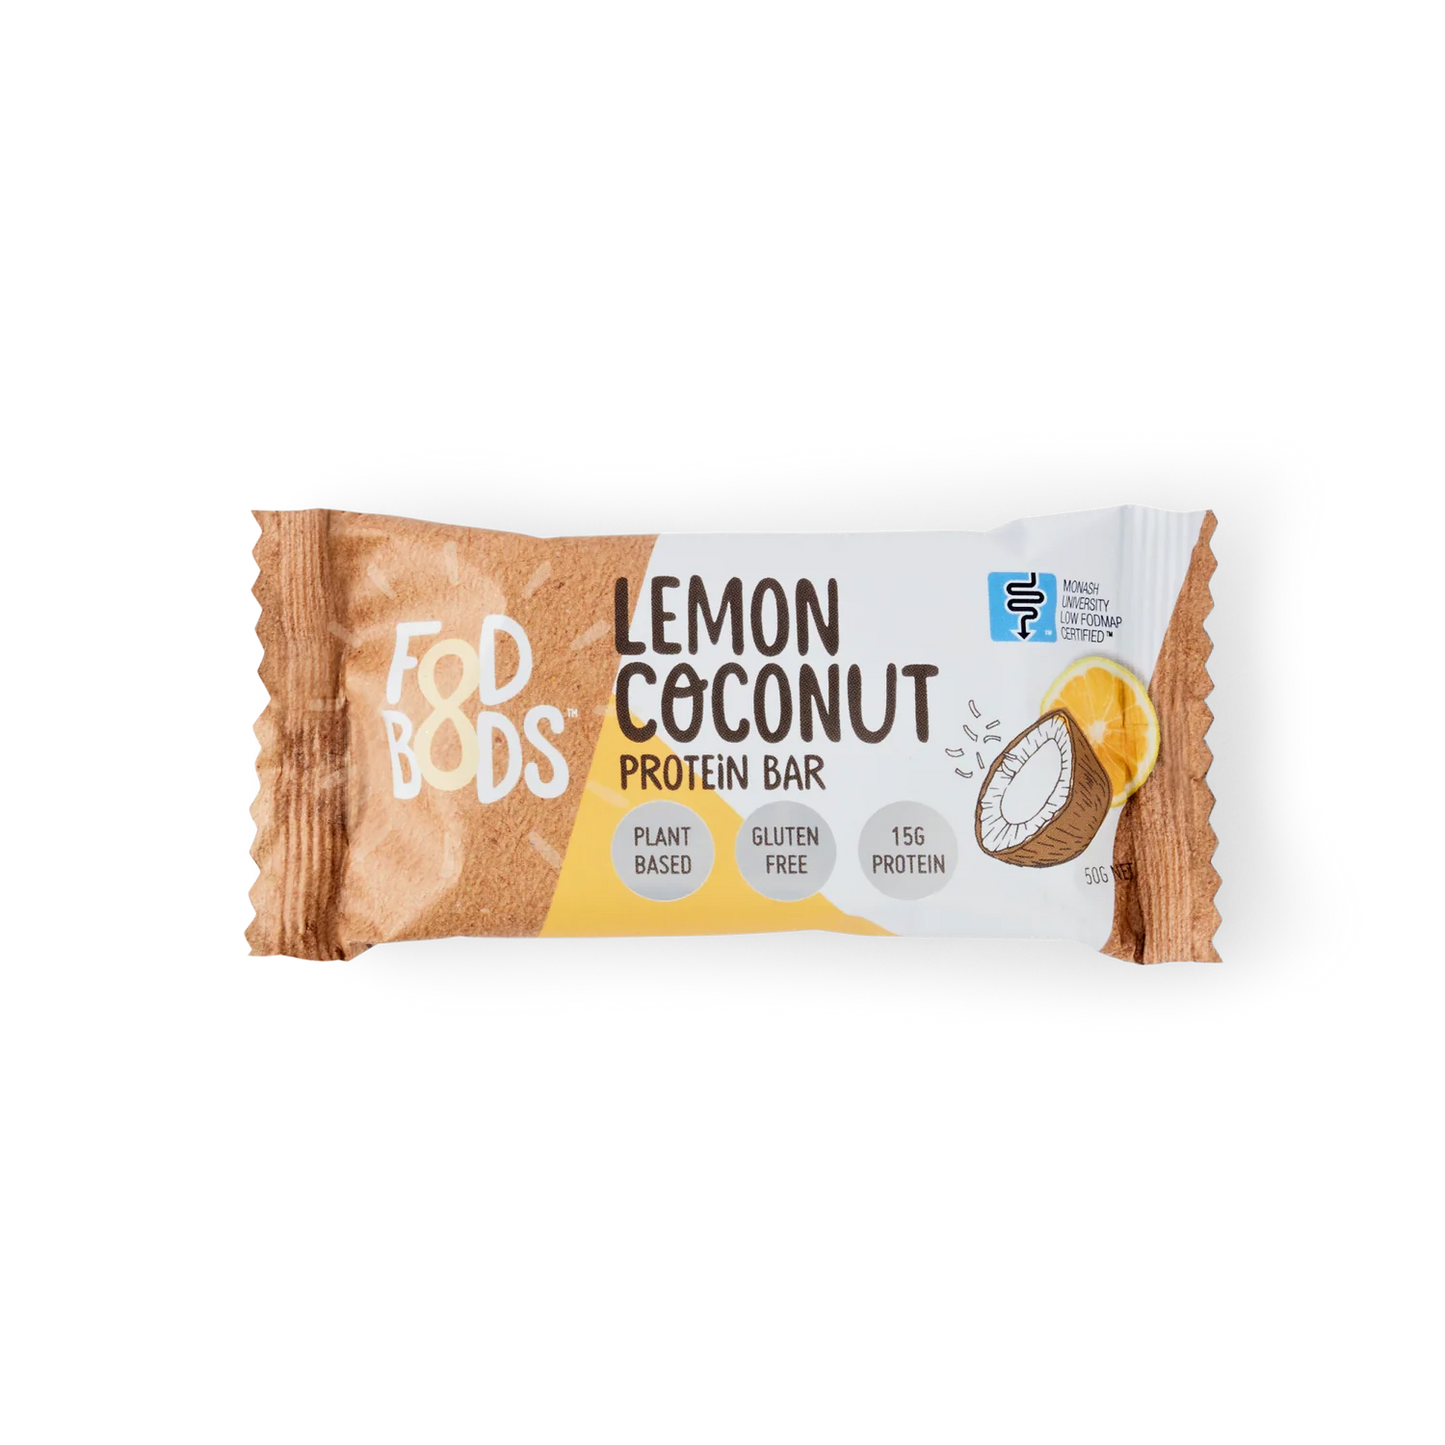 Fodbods - Lemon Coconut Protein Bar